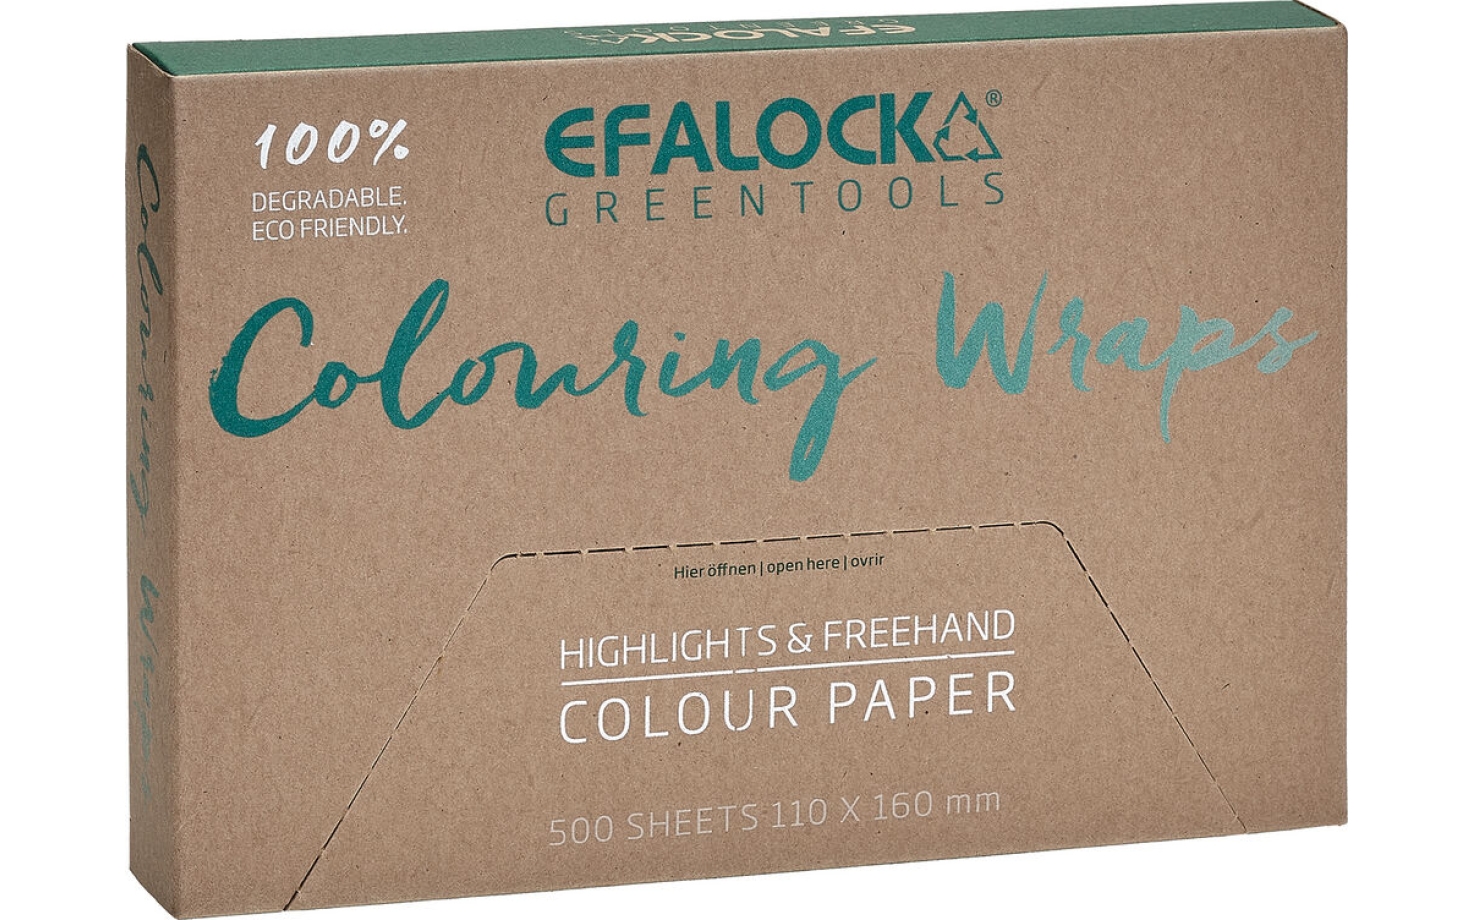 GREENTOOLS Coloring Wraps